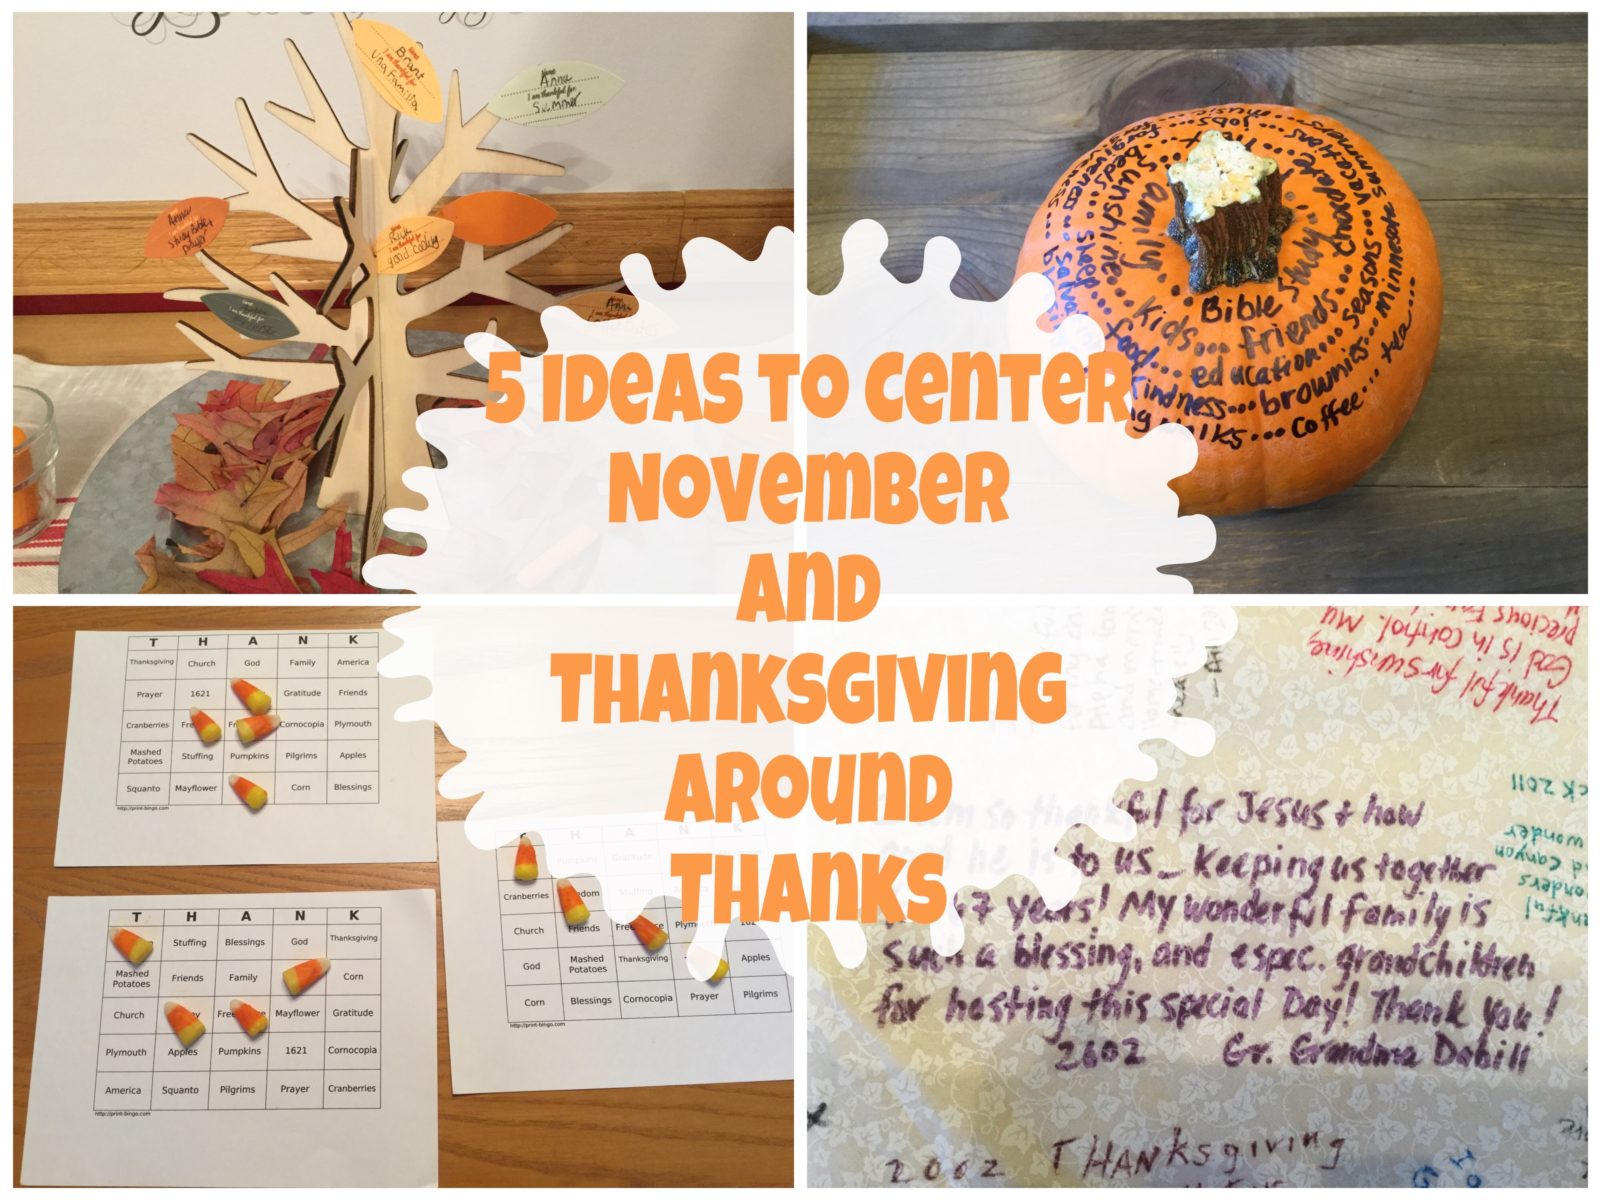 5 Ideas to center November and Thanksgiving around Thanks